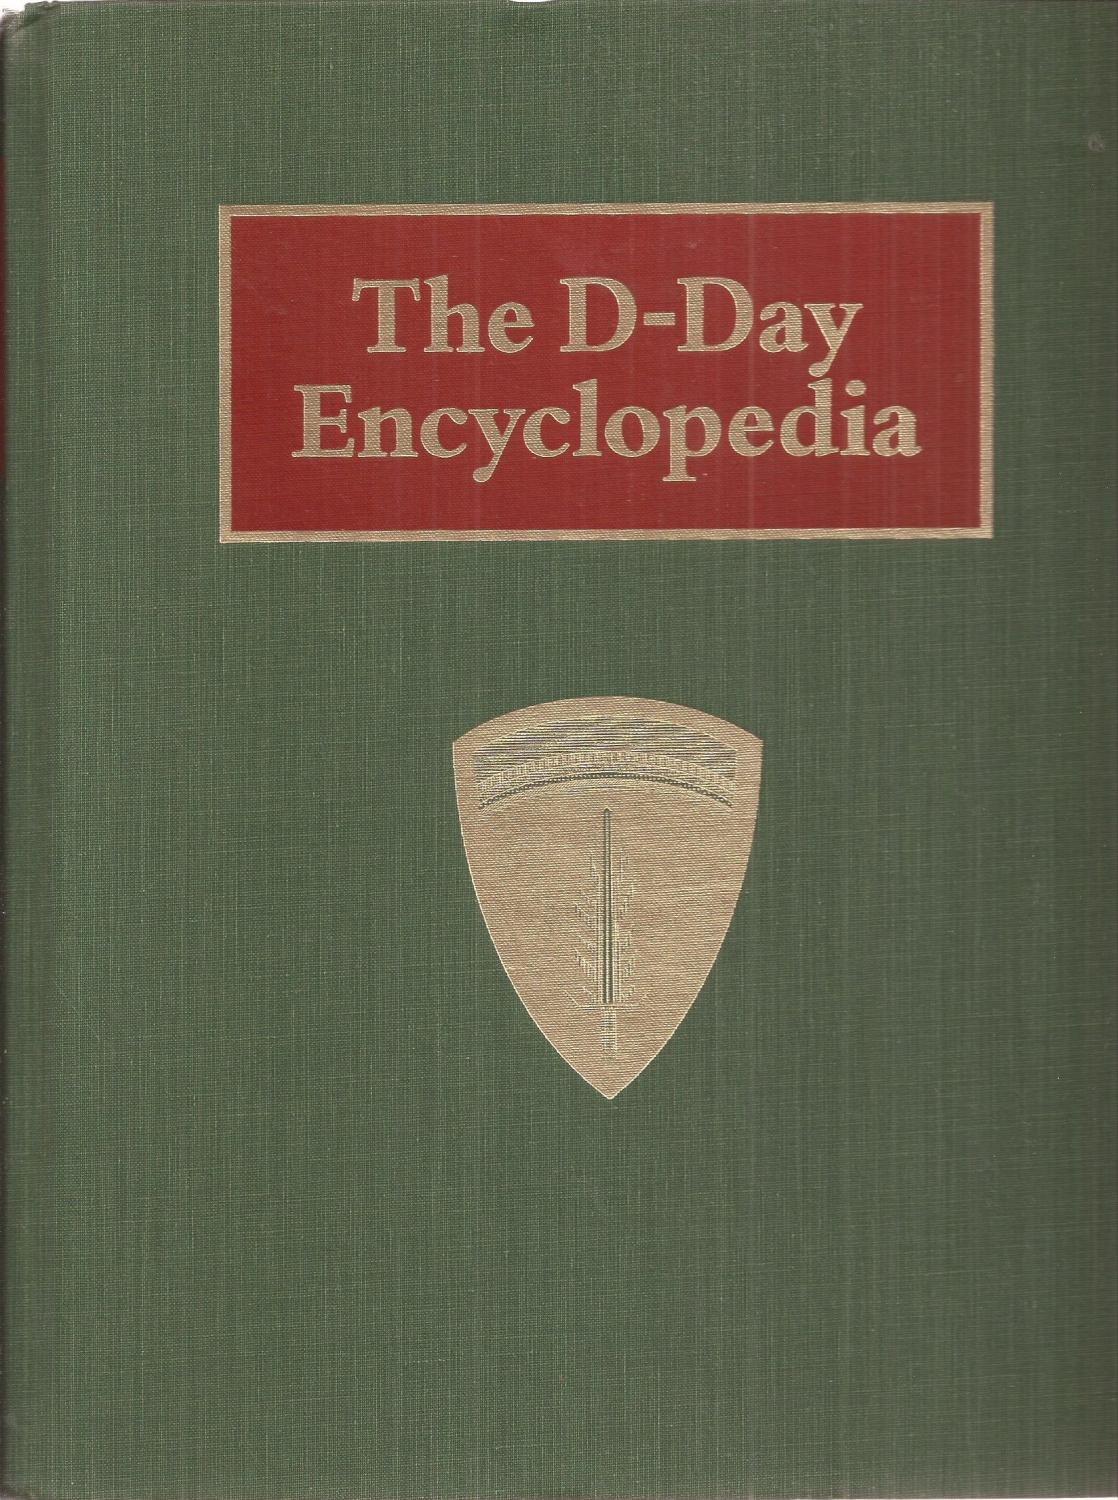 The D-Day Encyclopedia - Chandler, David G. & James Lawton Collins, Jr., editors